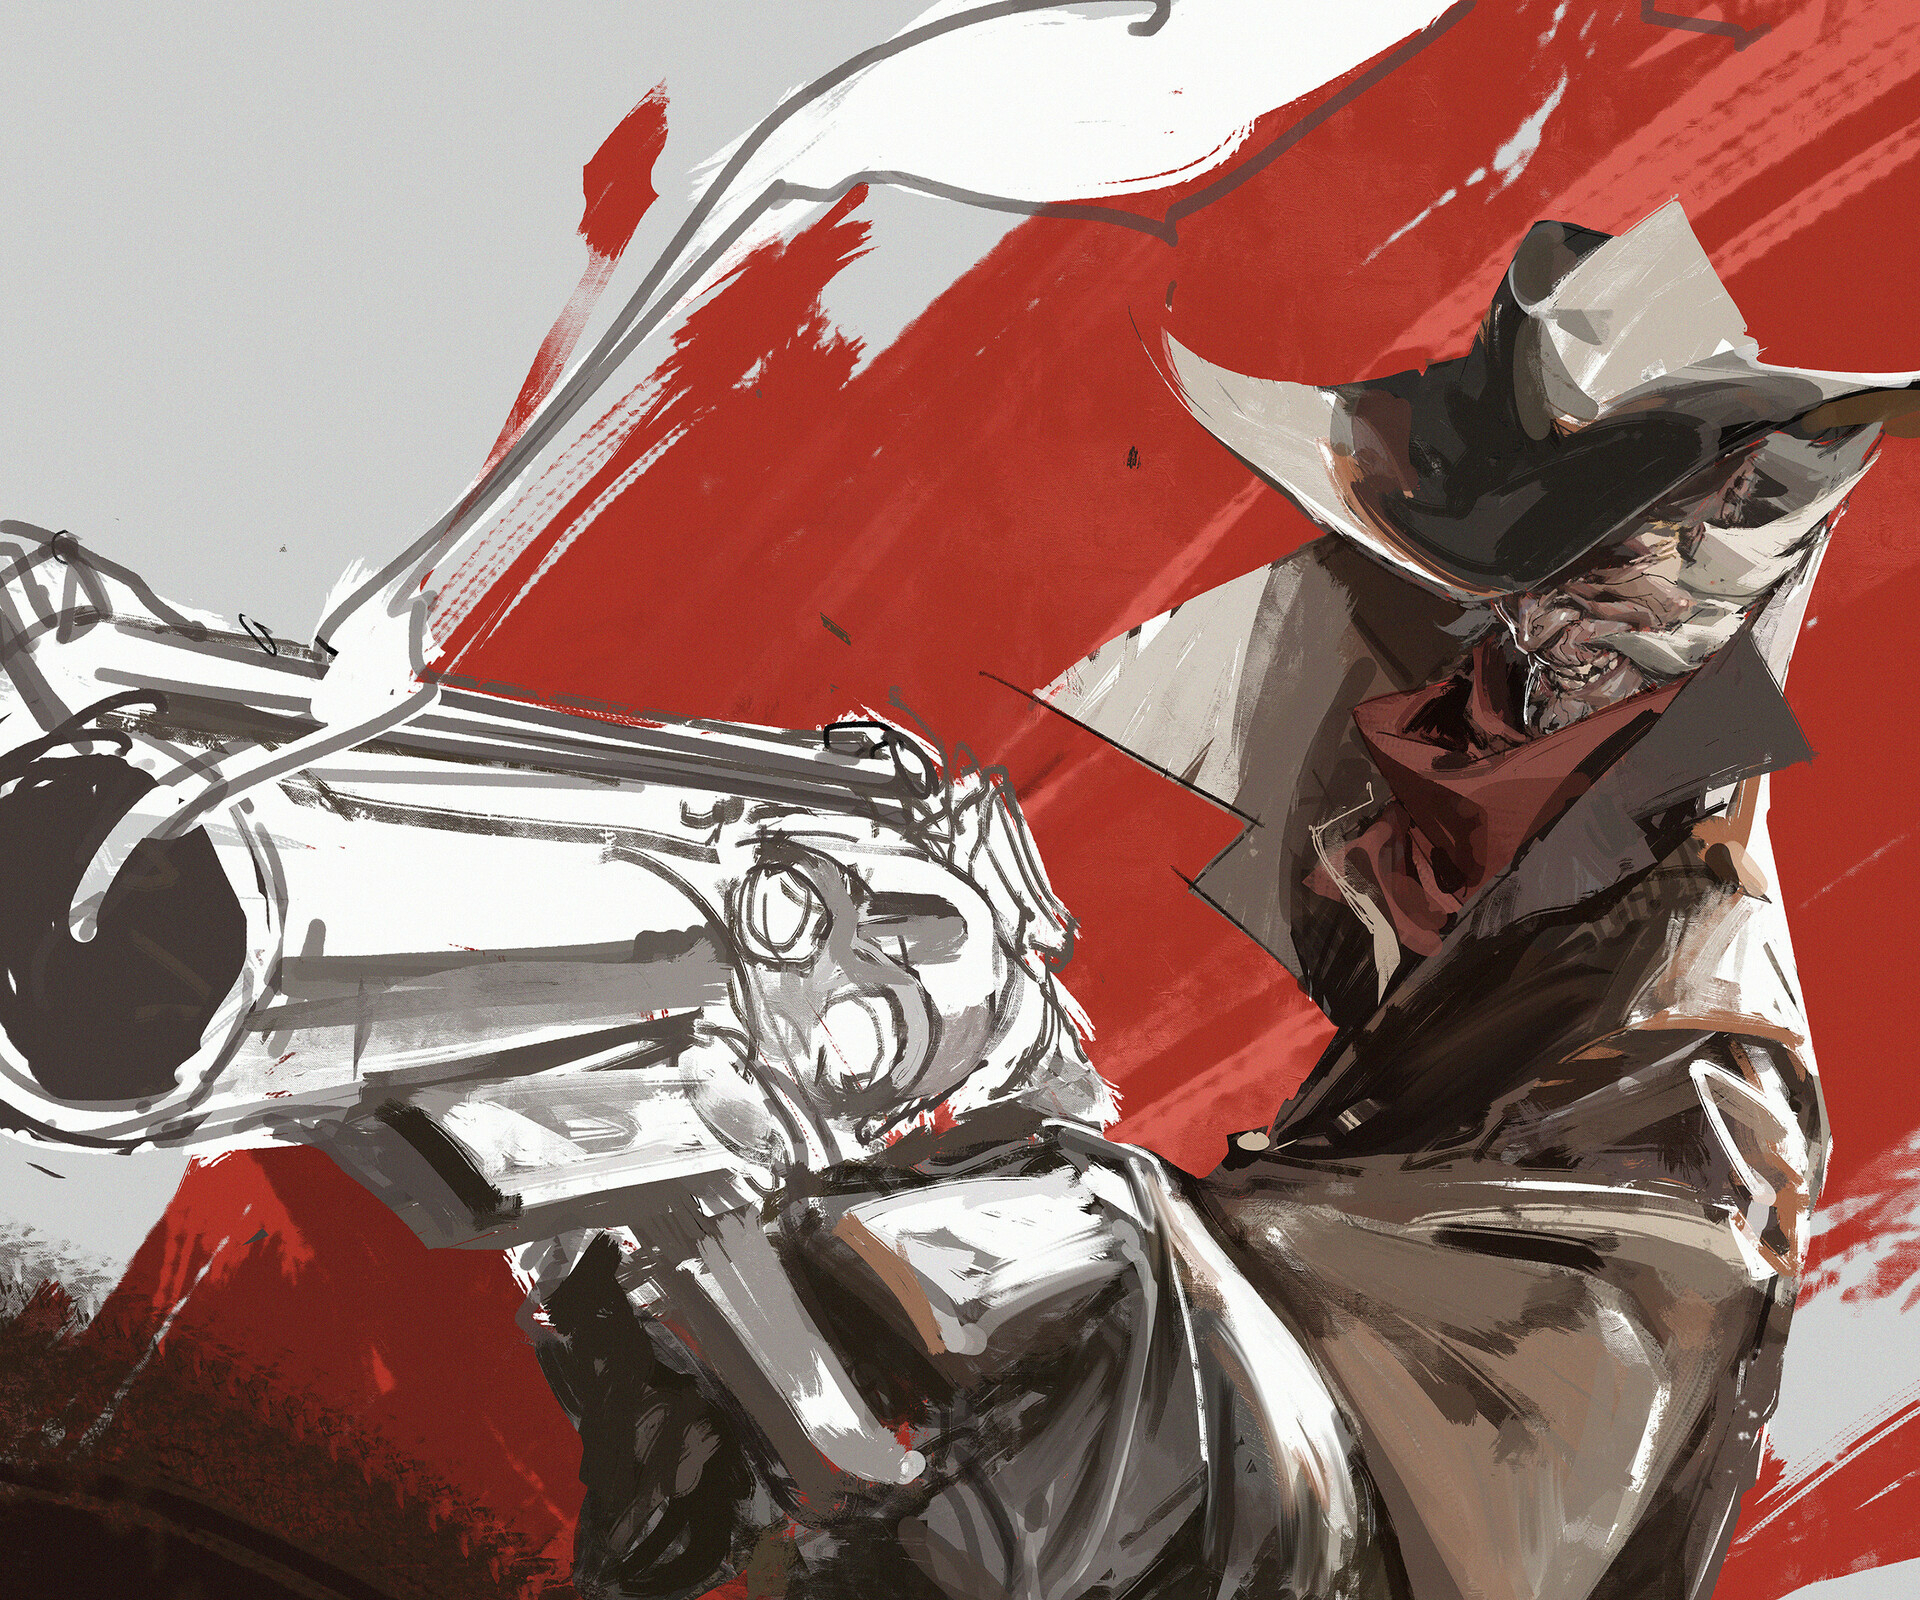 Artistic Cowboy HD Wallpaper | Background Image